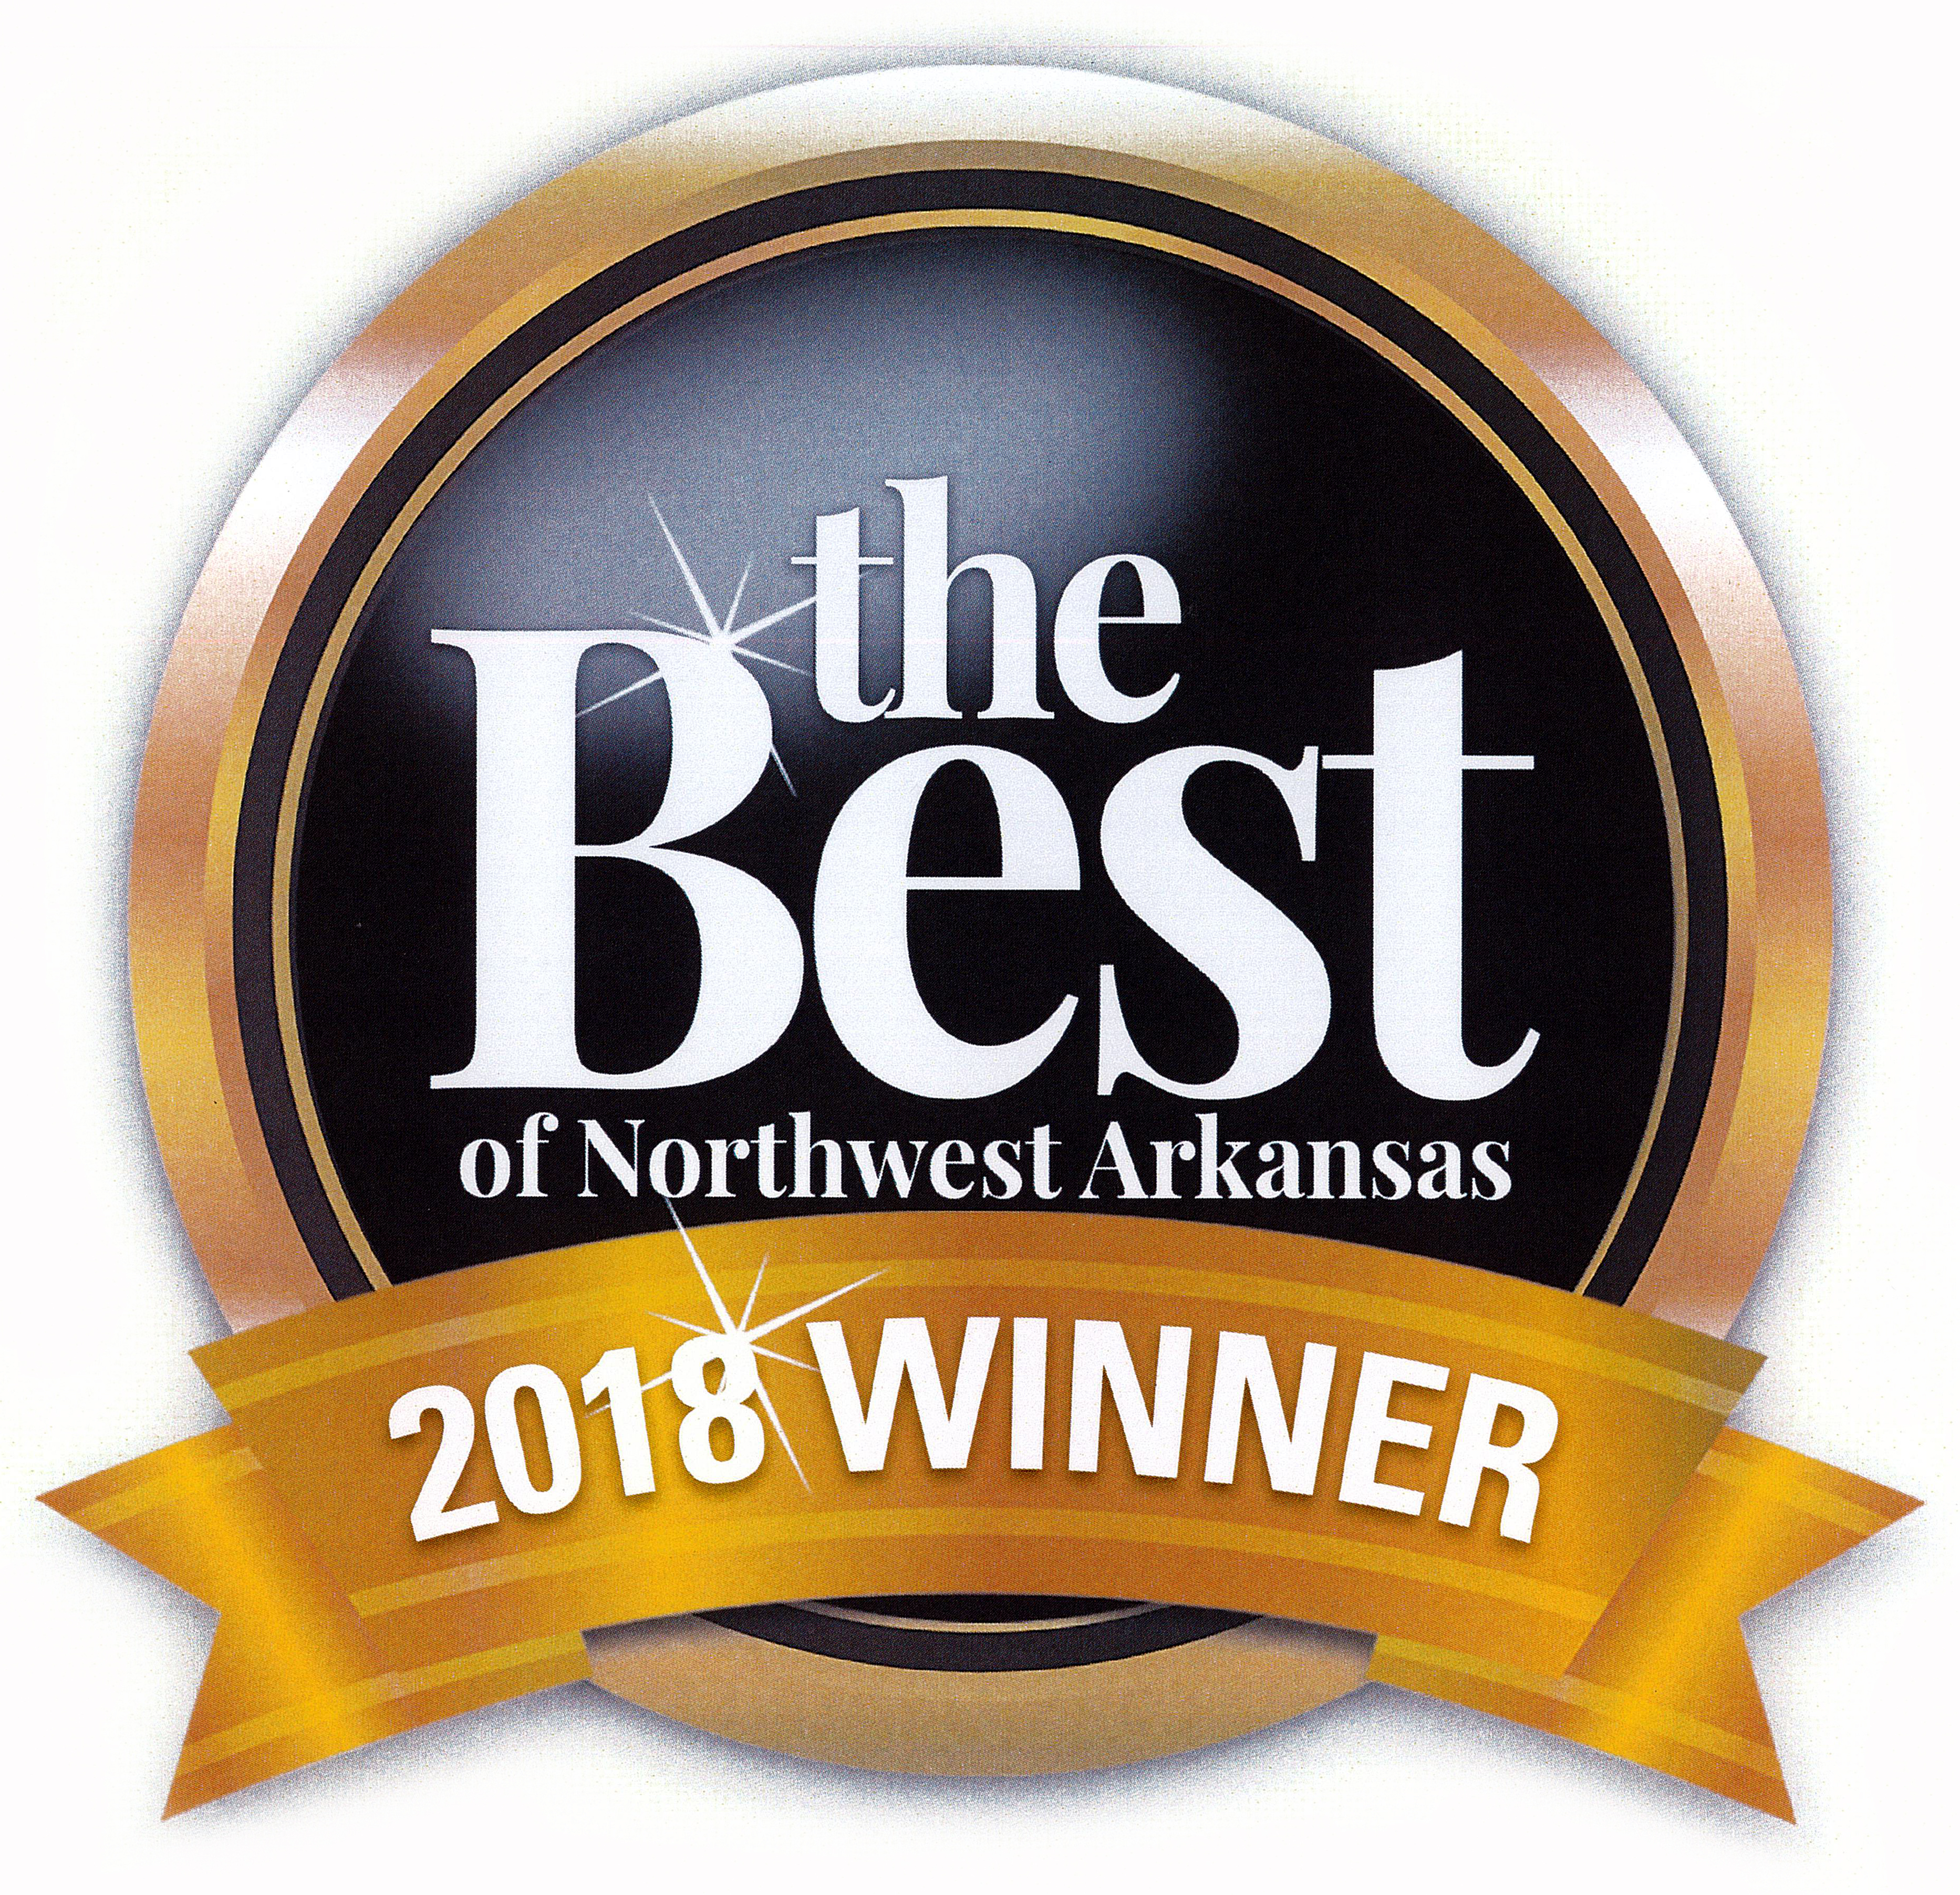 Circle of Life Named the 2018 Winner of the Best of Northwest Arkansas Award by the Democrat Gazette